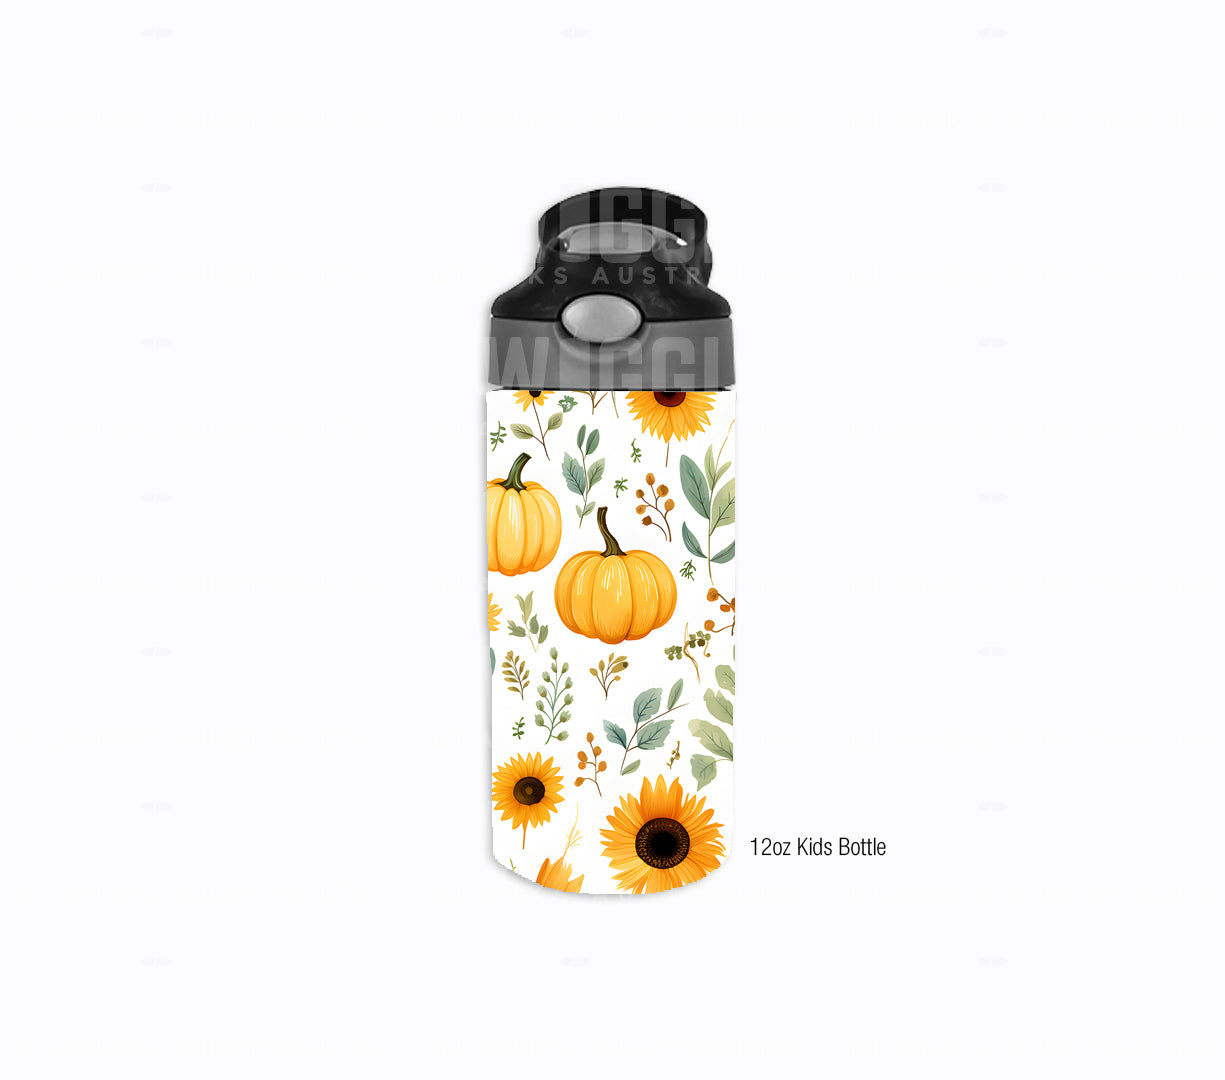 Sunflowers & Pumpkins Watercolour Kids #49 - Digital Download - Assorted Bottle Sizes